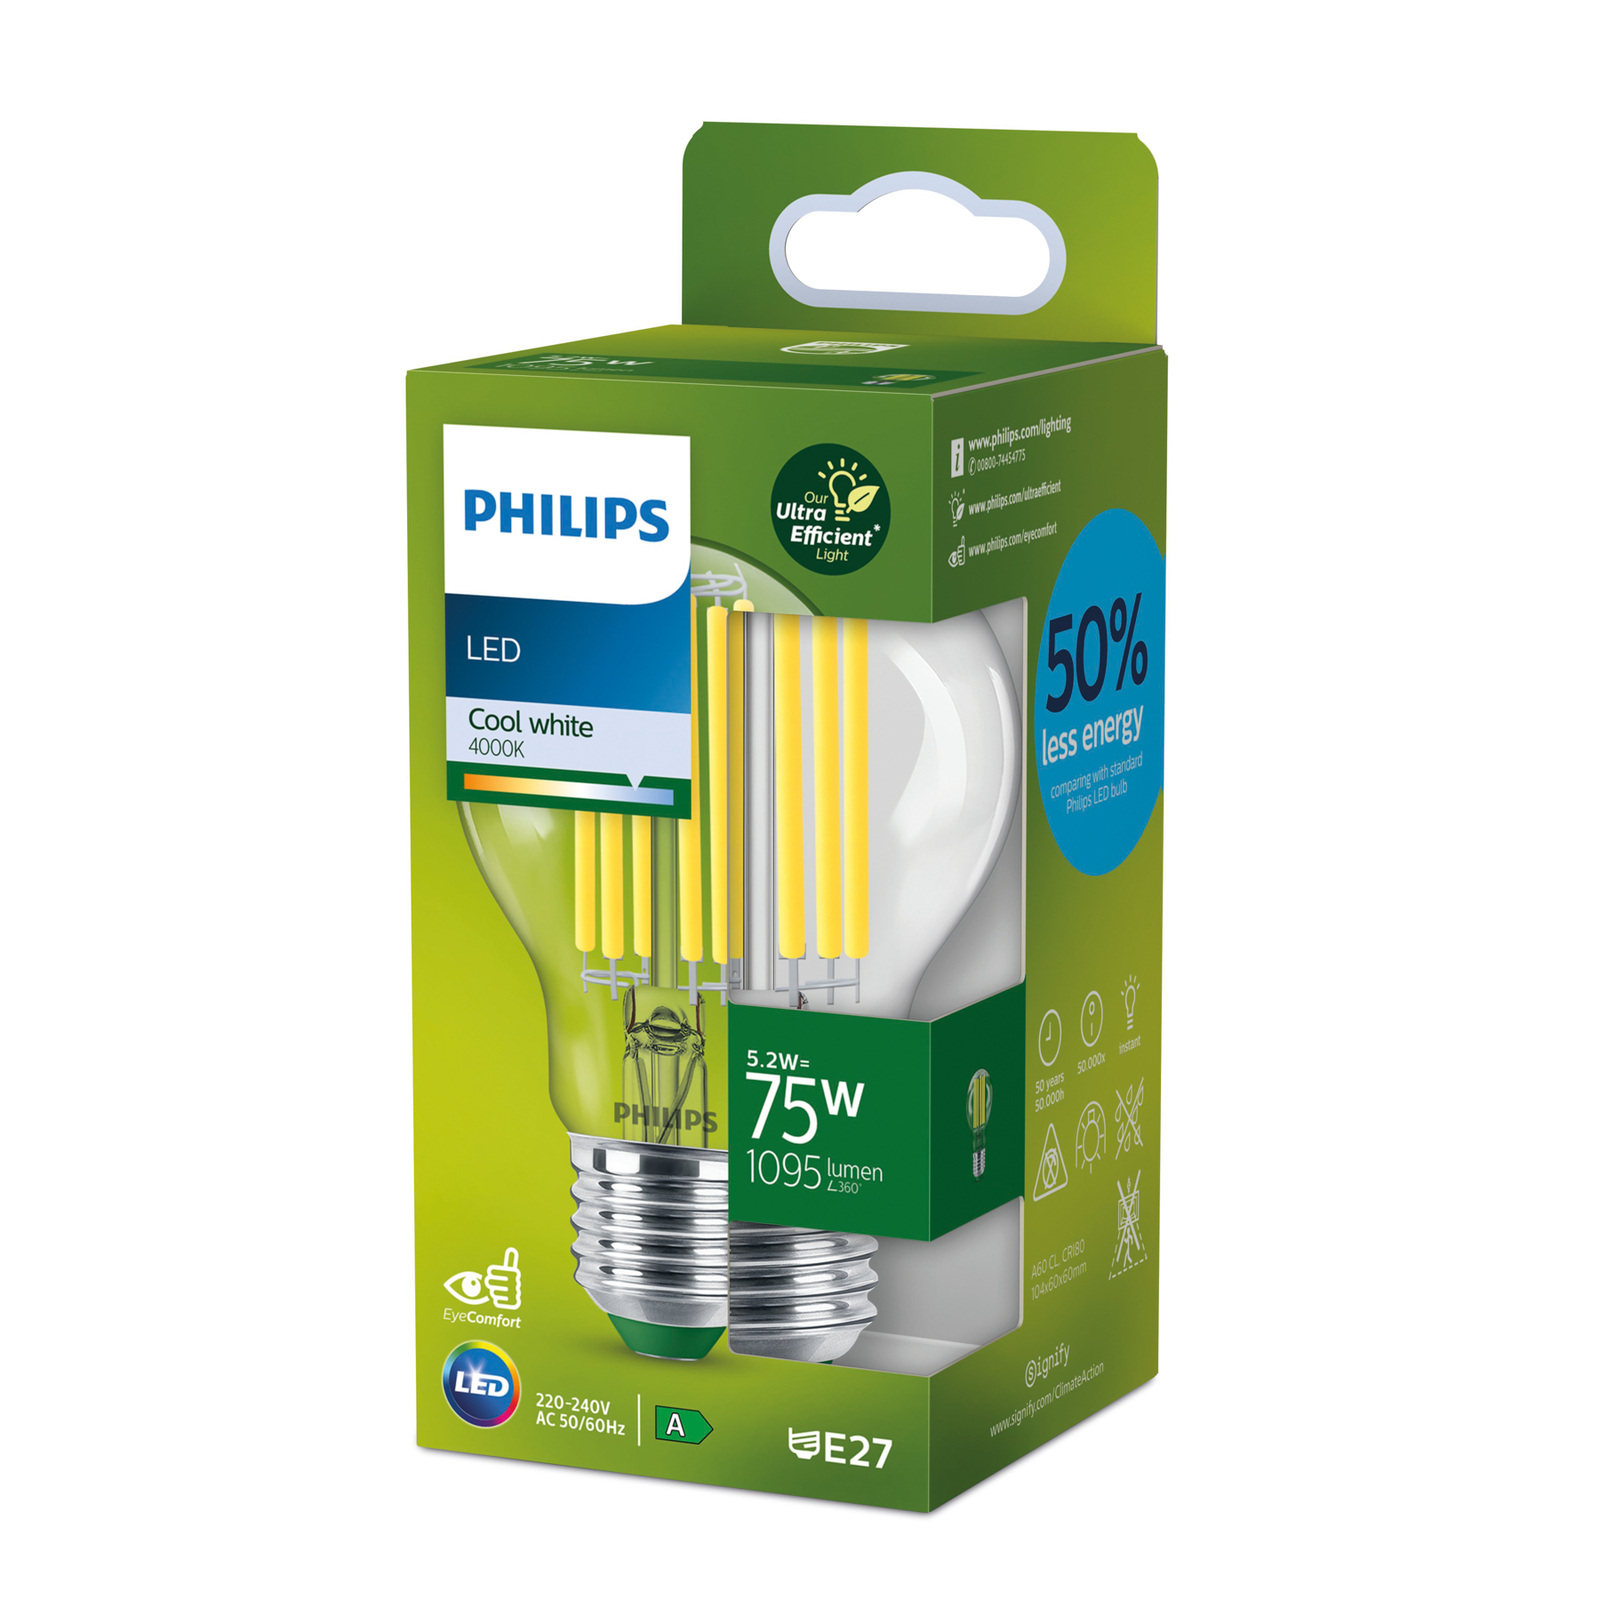 Philips E27 bec LED A60 5,2W 1095lm 4.000K clar